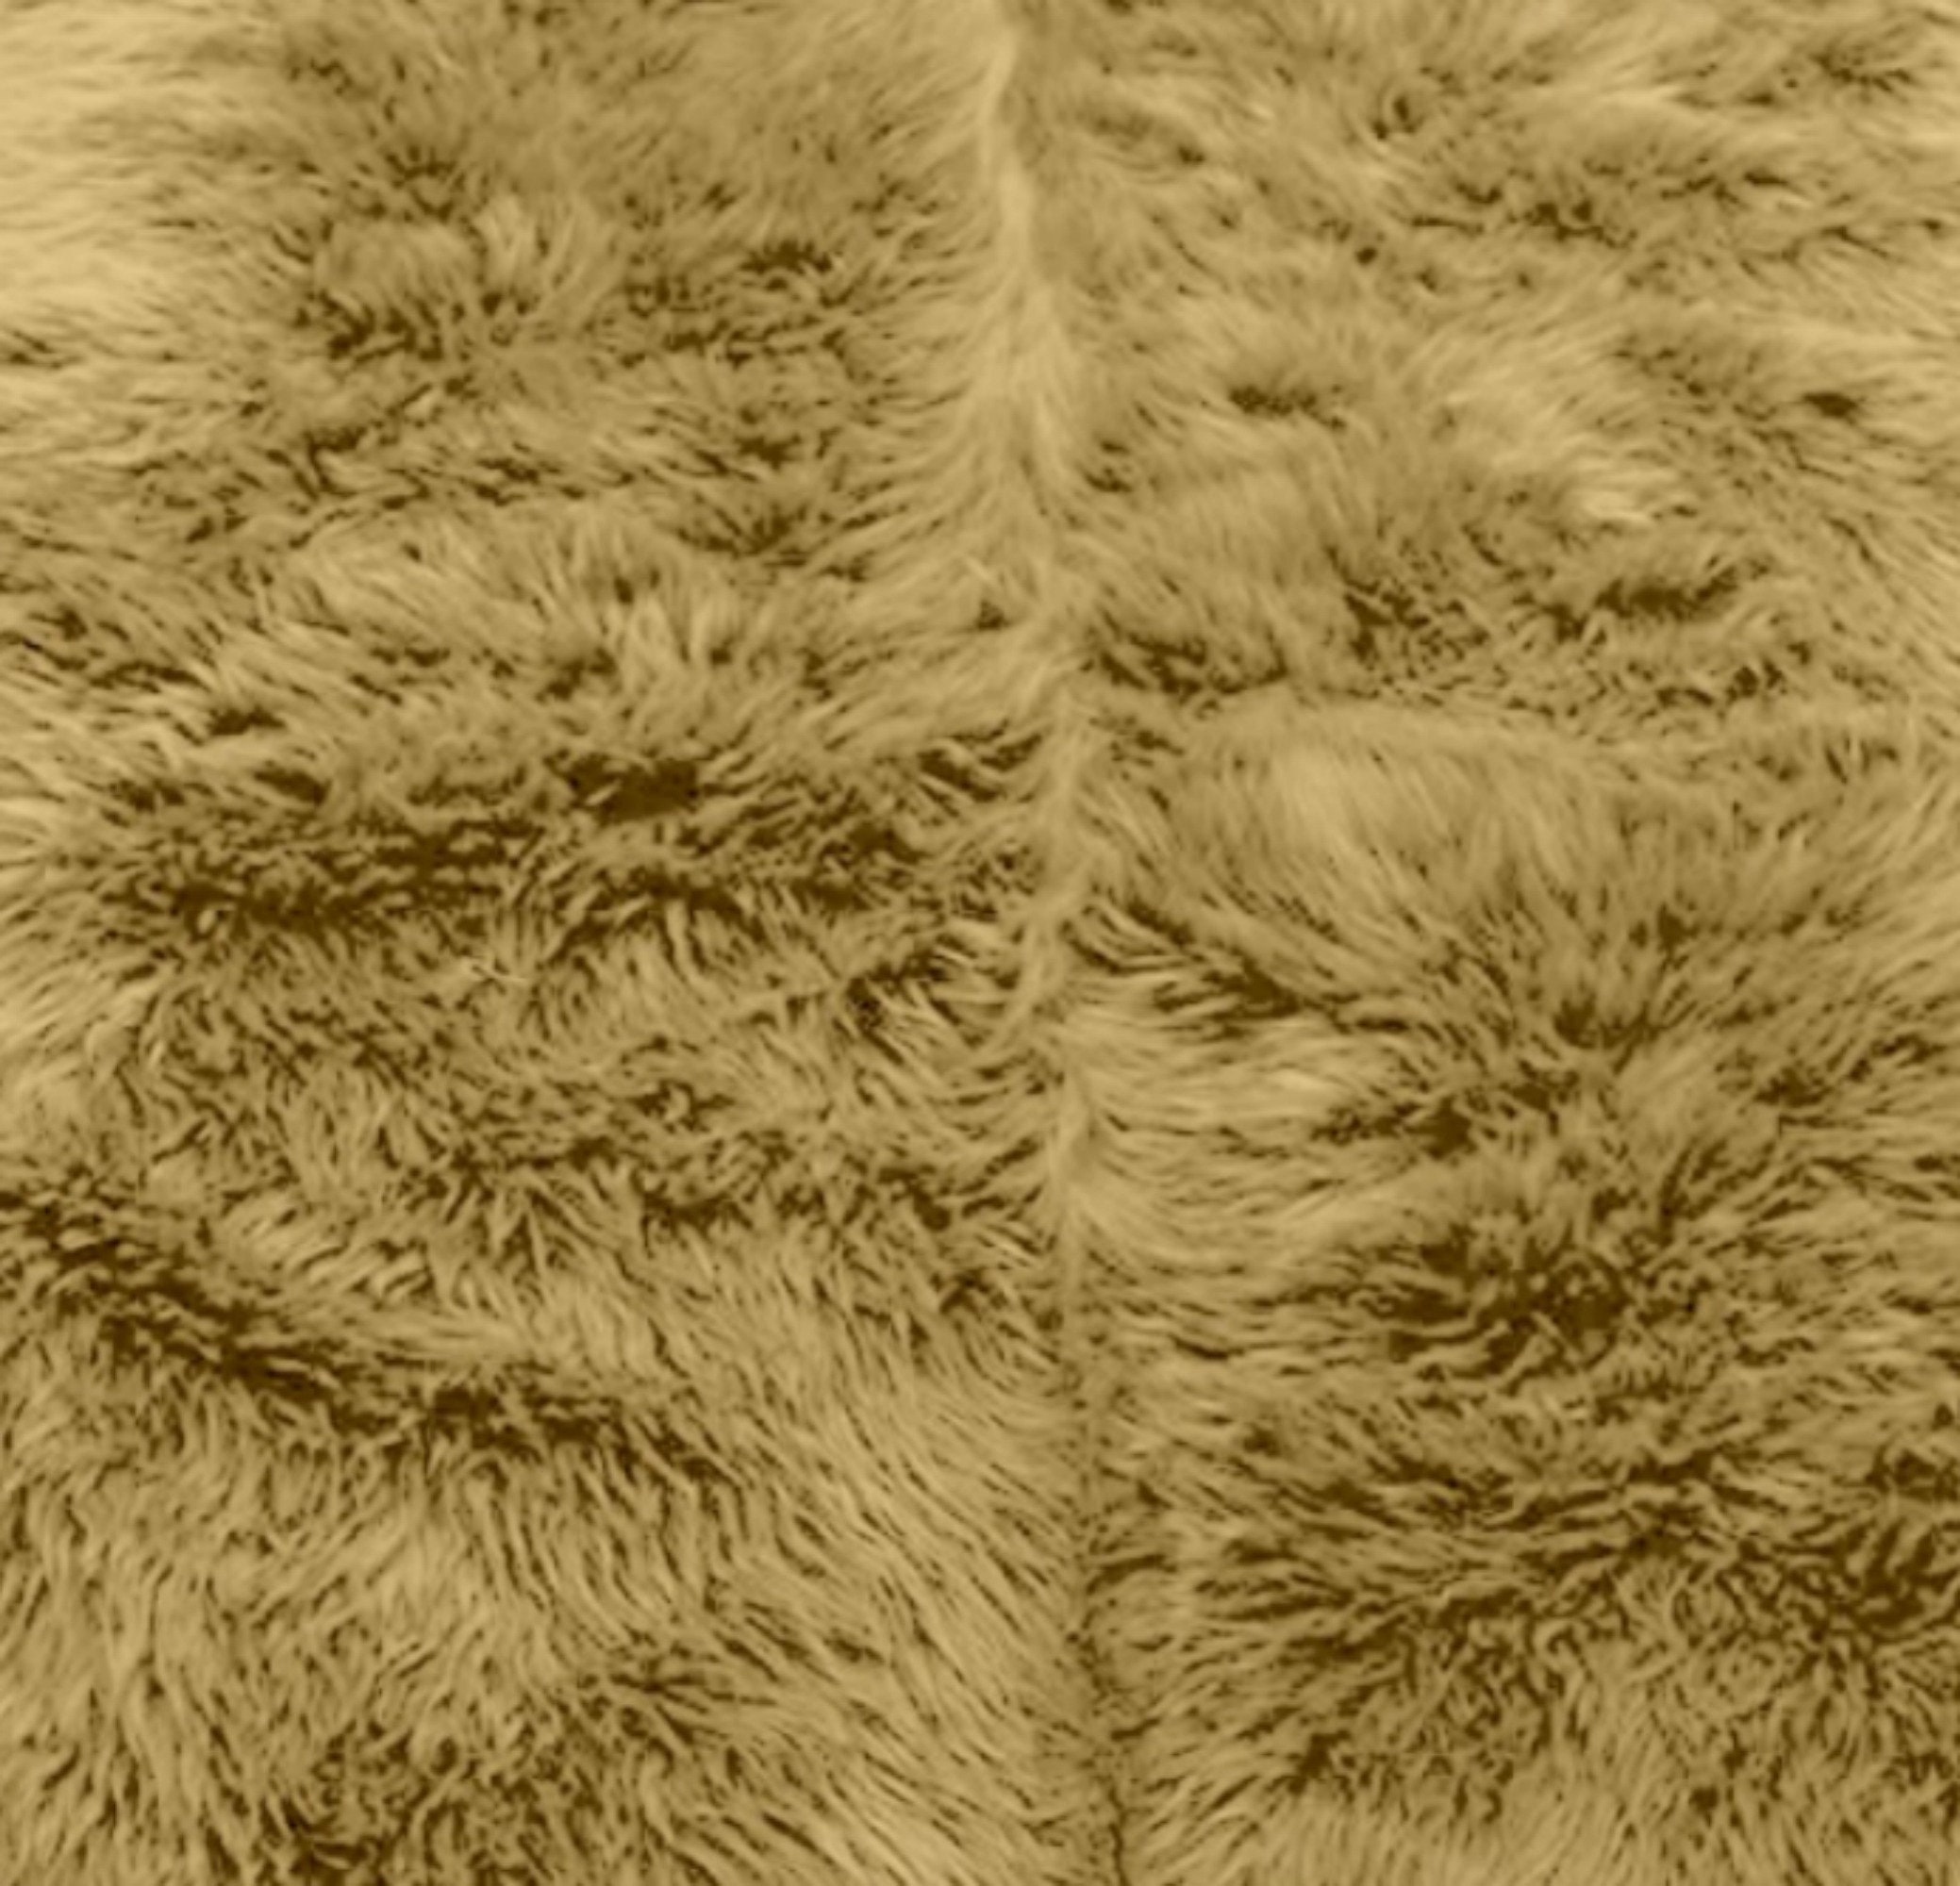 White Bear Skin Rug. Realistic. Shag Faux Fur. Area Rug. Lodge | Etsy